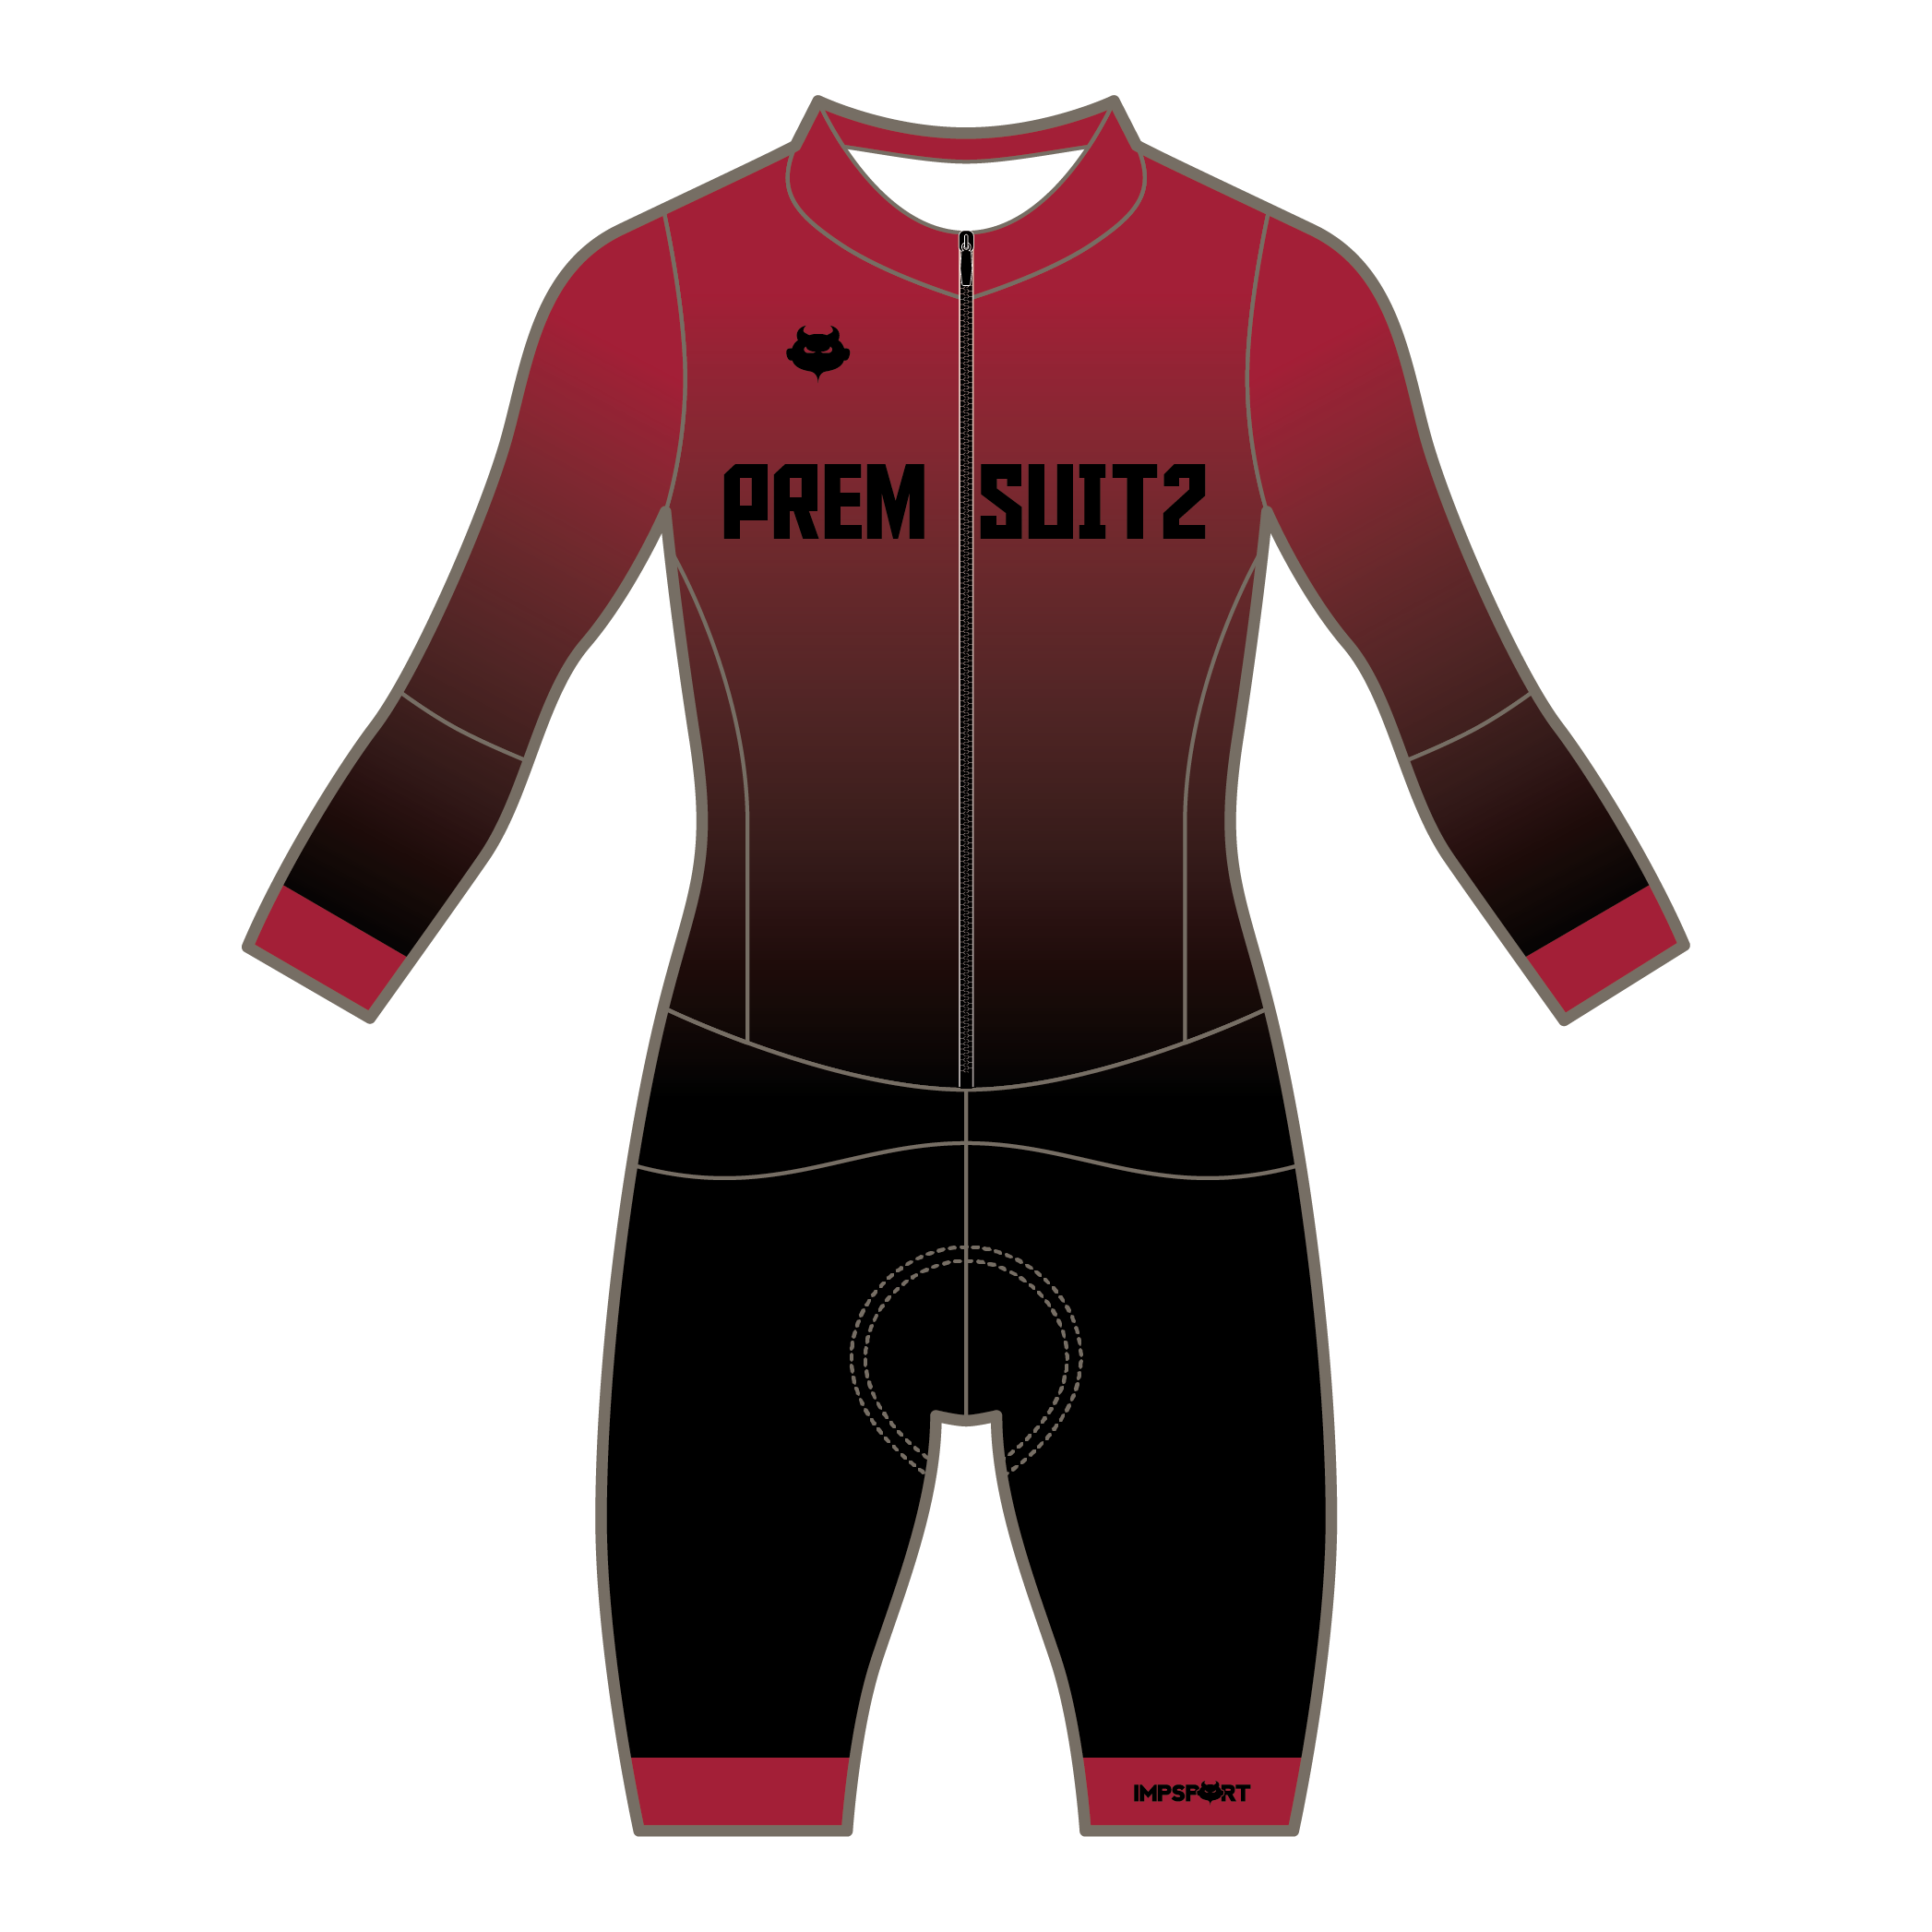 Impsport Prem Suit 2